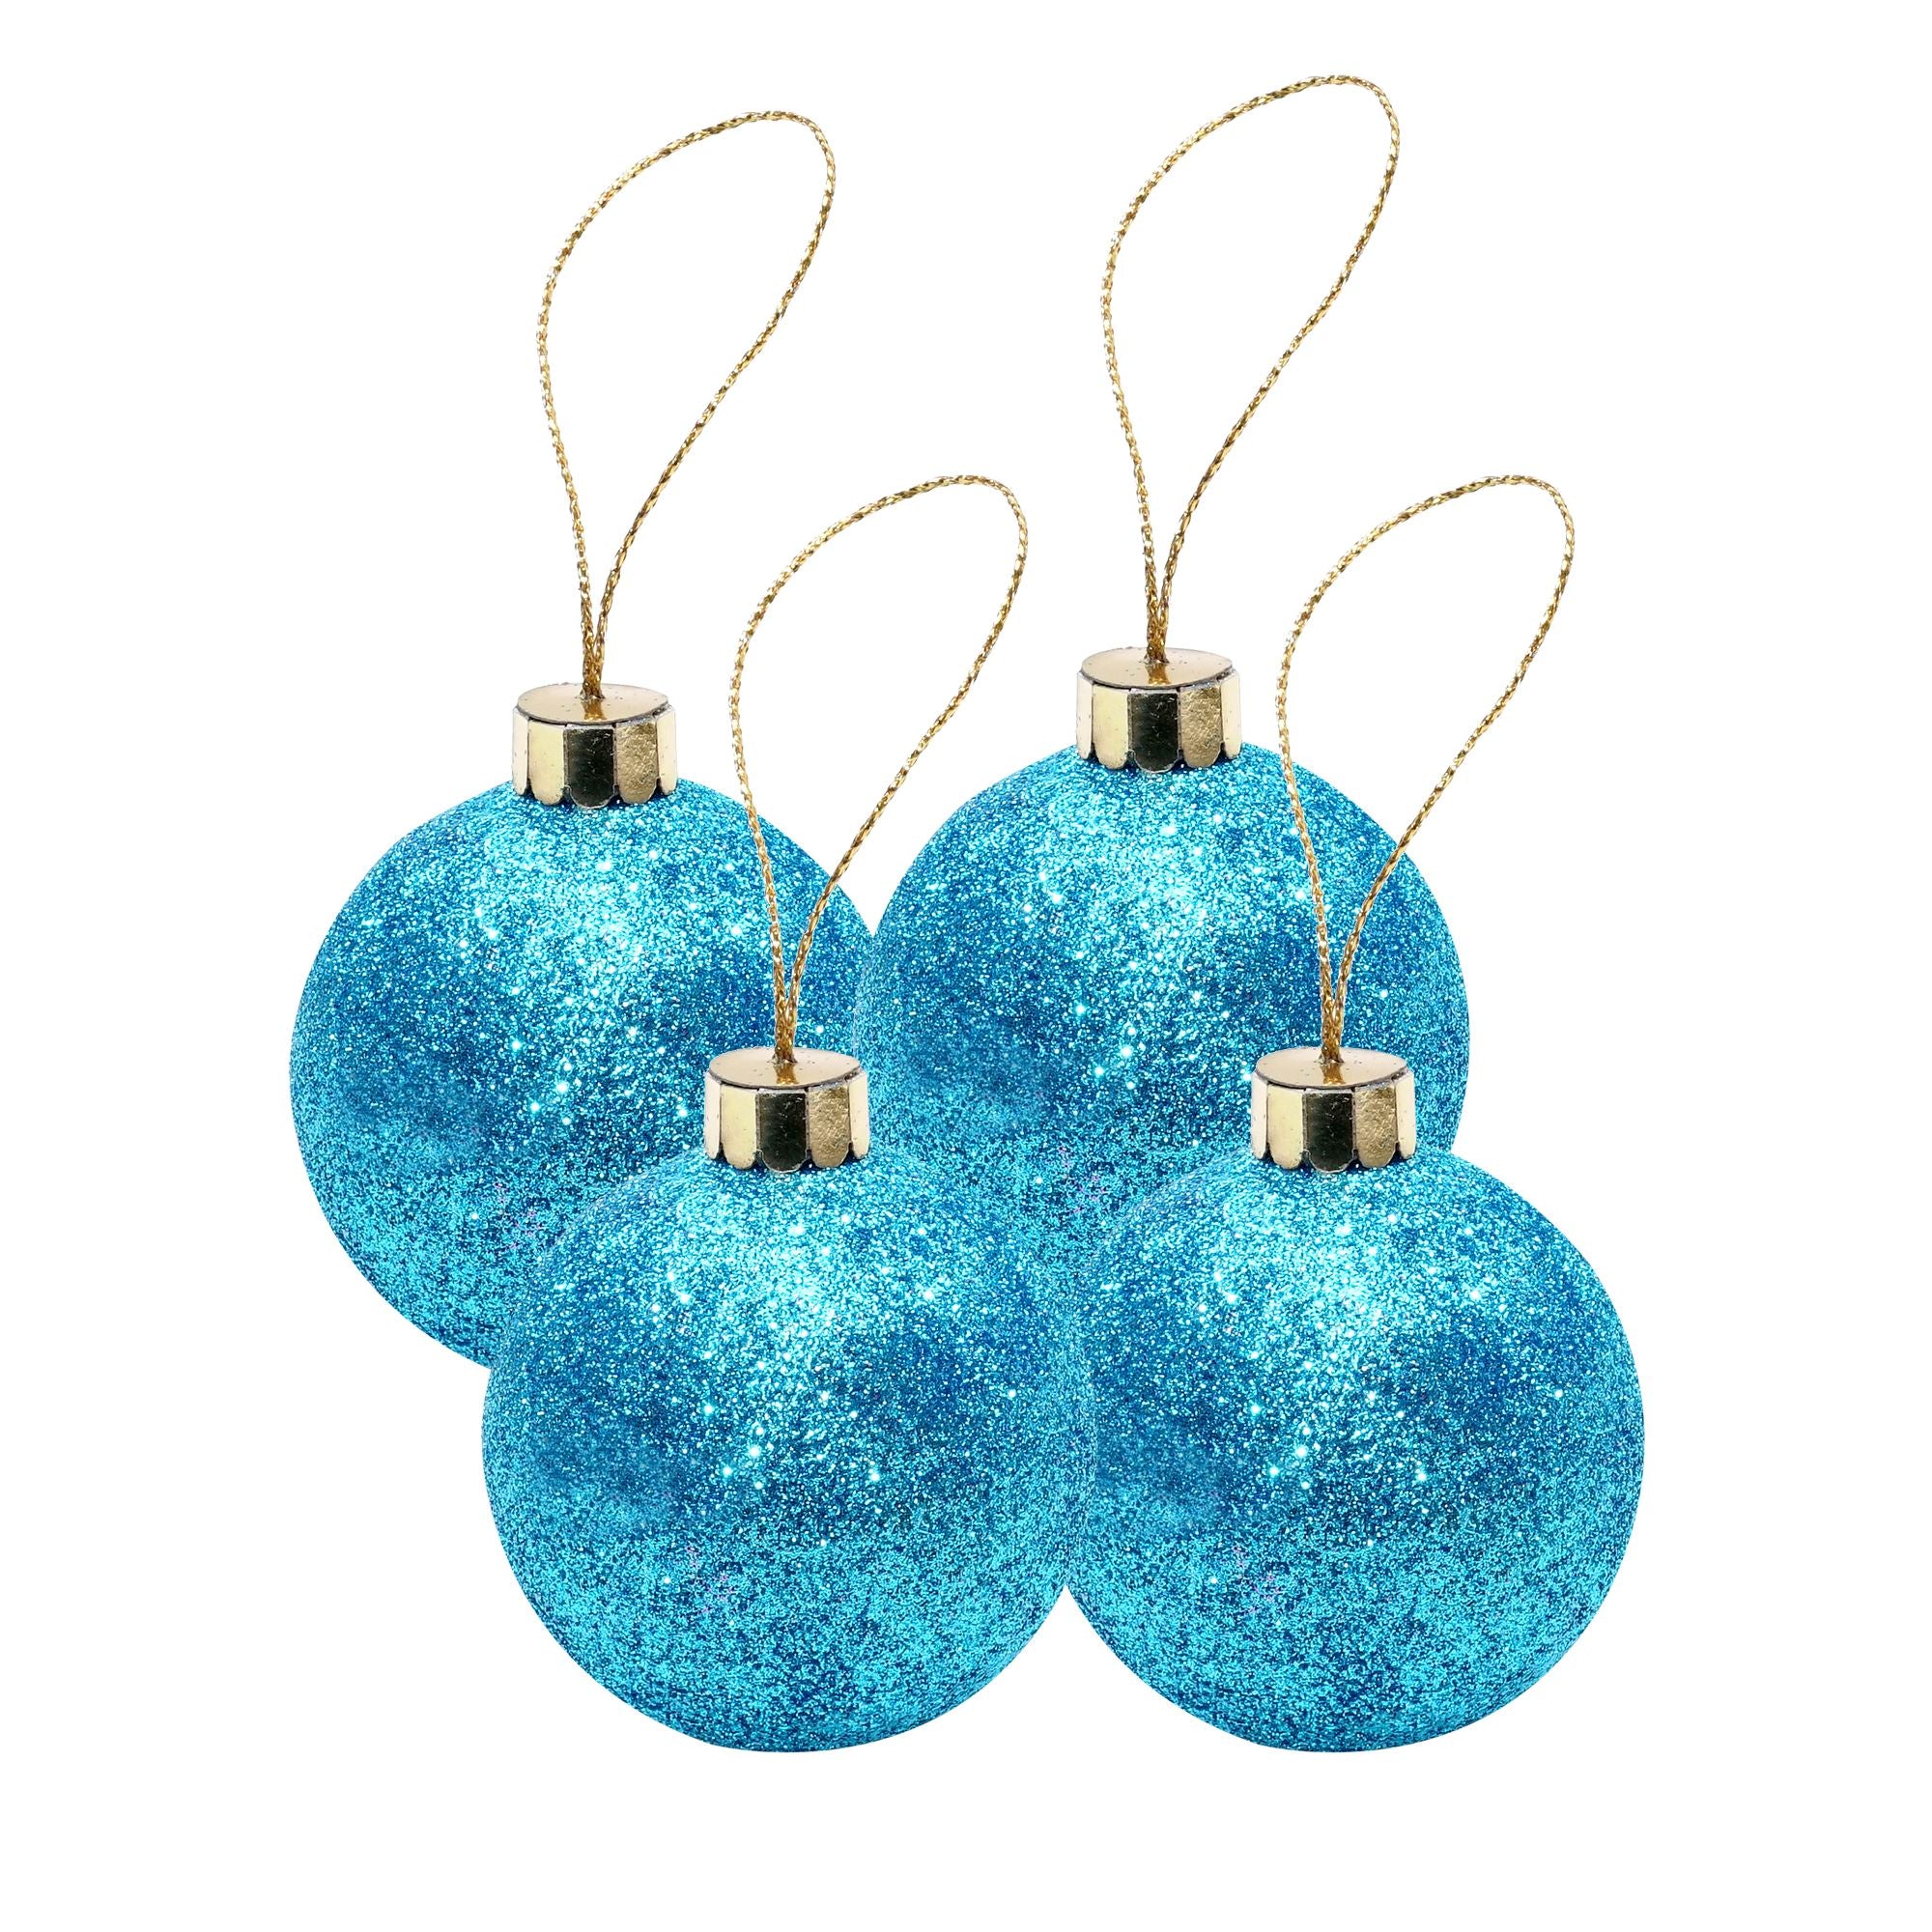 Handmade Christmas Ornaments - Glitter Baubles, 70mm, Blue, 4pc